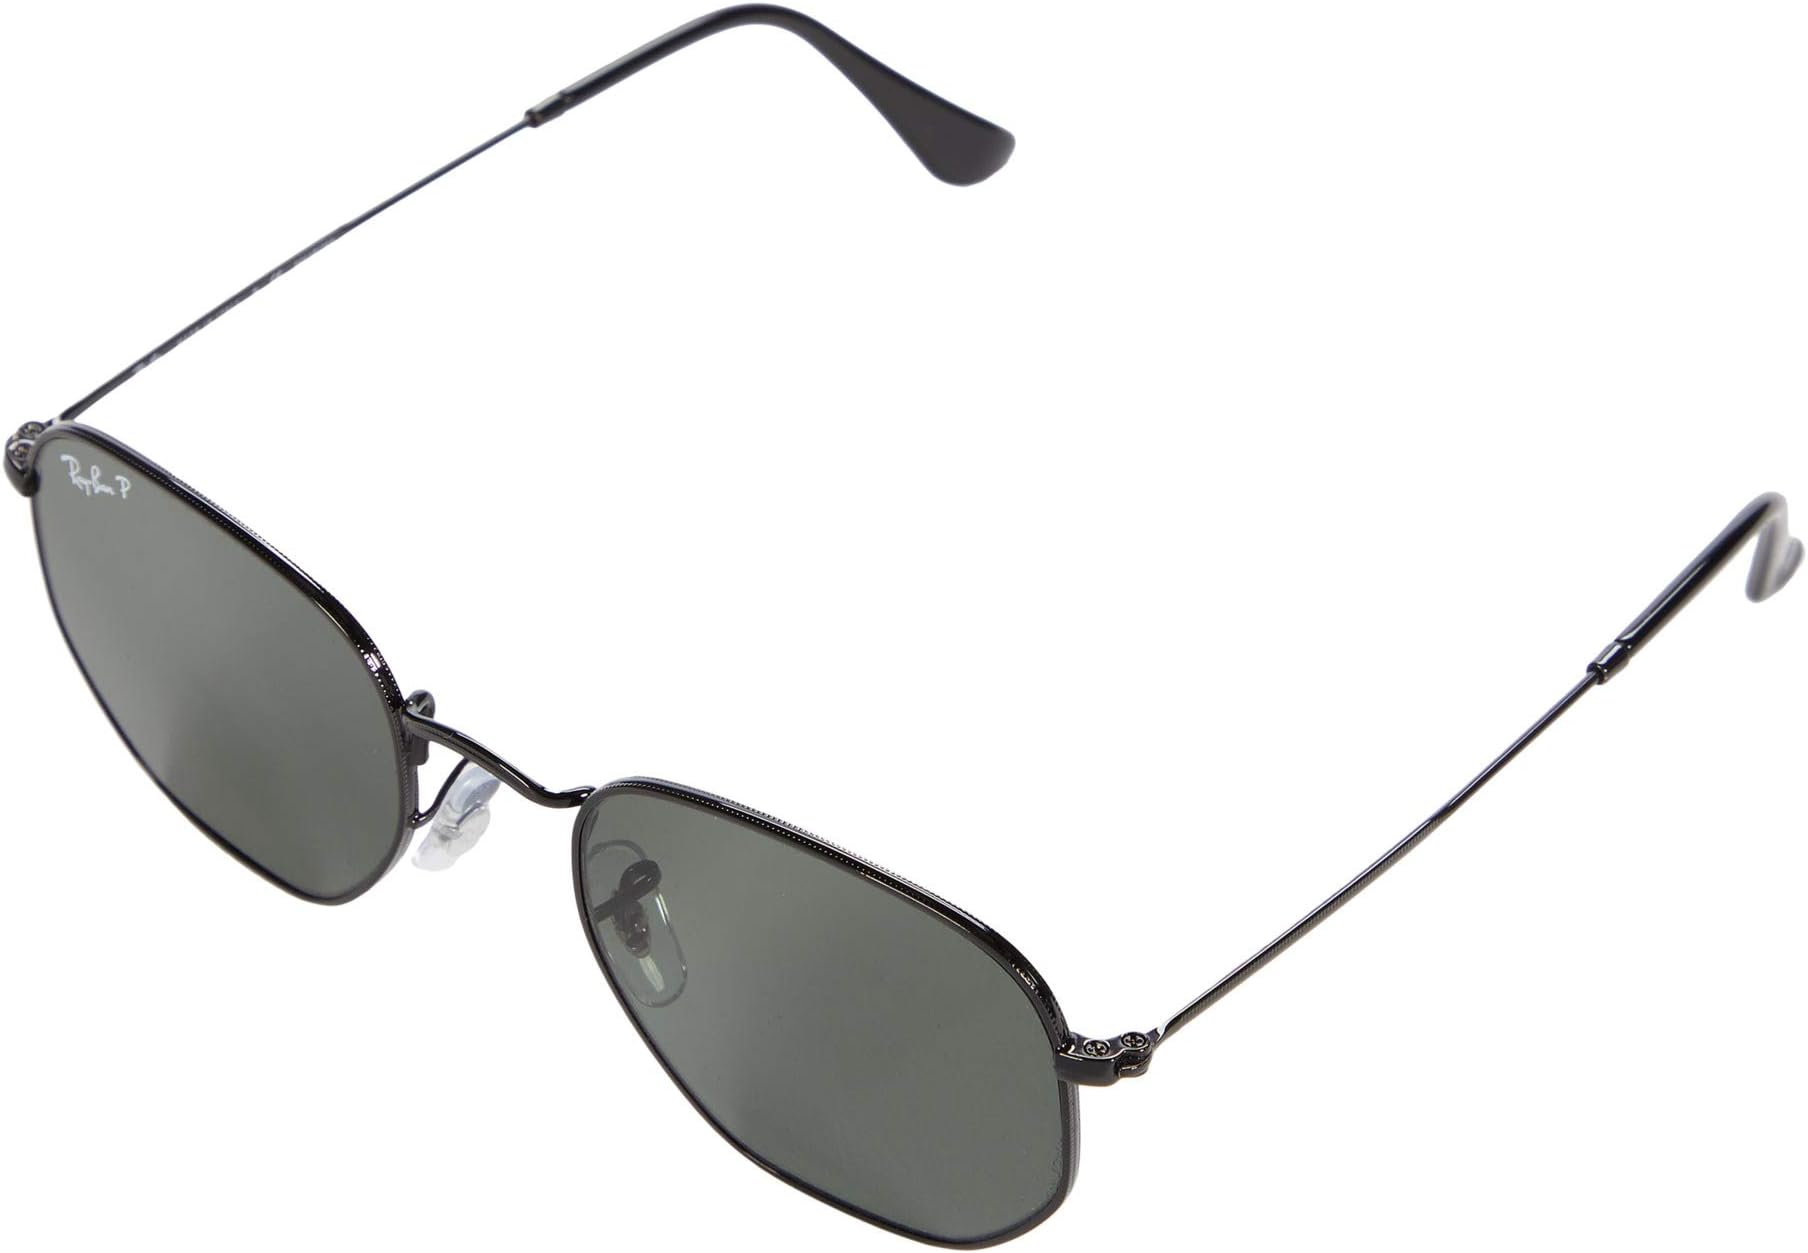 Солнцезащитные очки 0RB3548N 51mm - Polarized Ray-Ban, цвет Black/Polar Green солнцезащитные очки ray ban rb4351ch polarized голубой размер 51mm